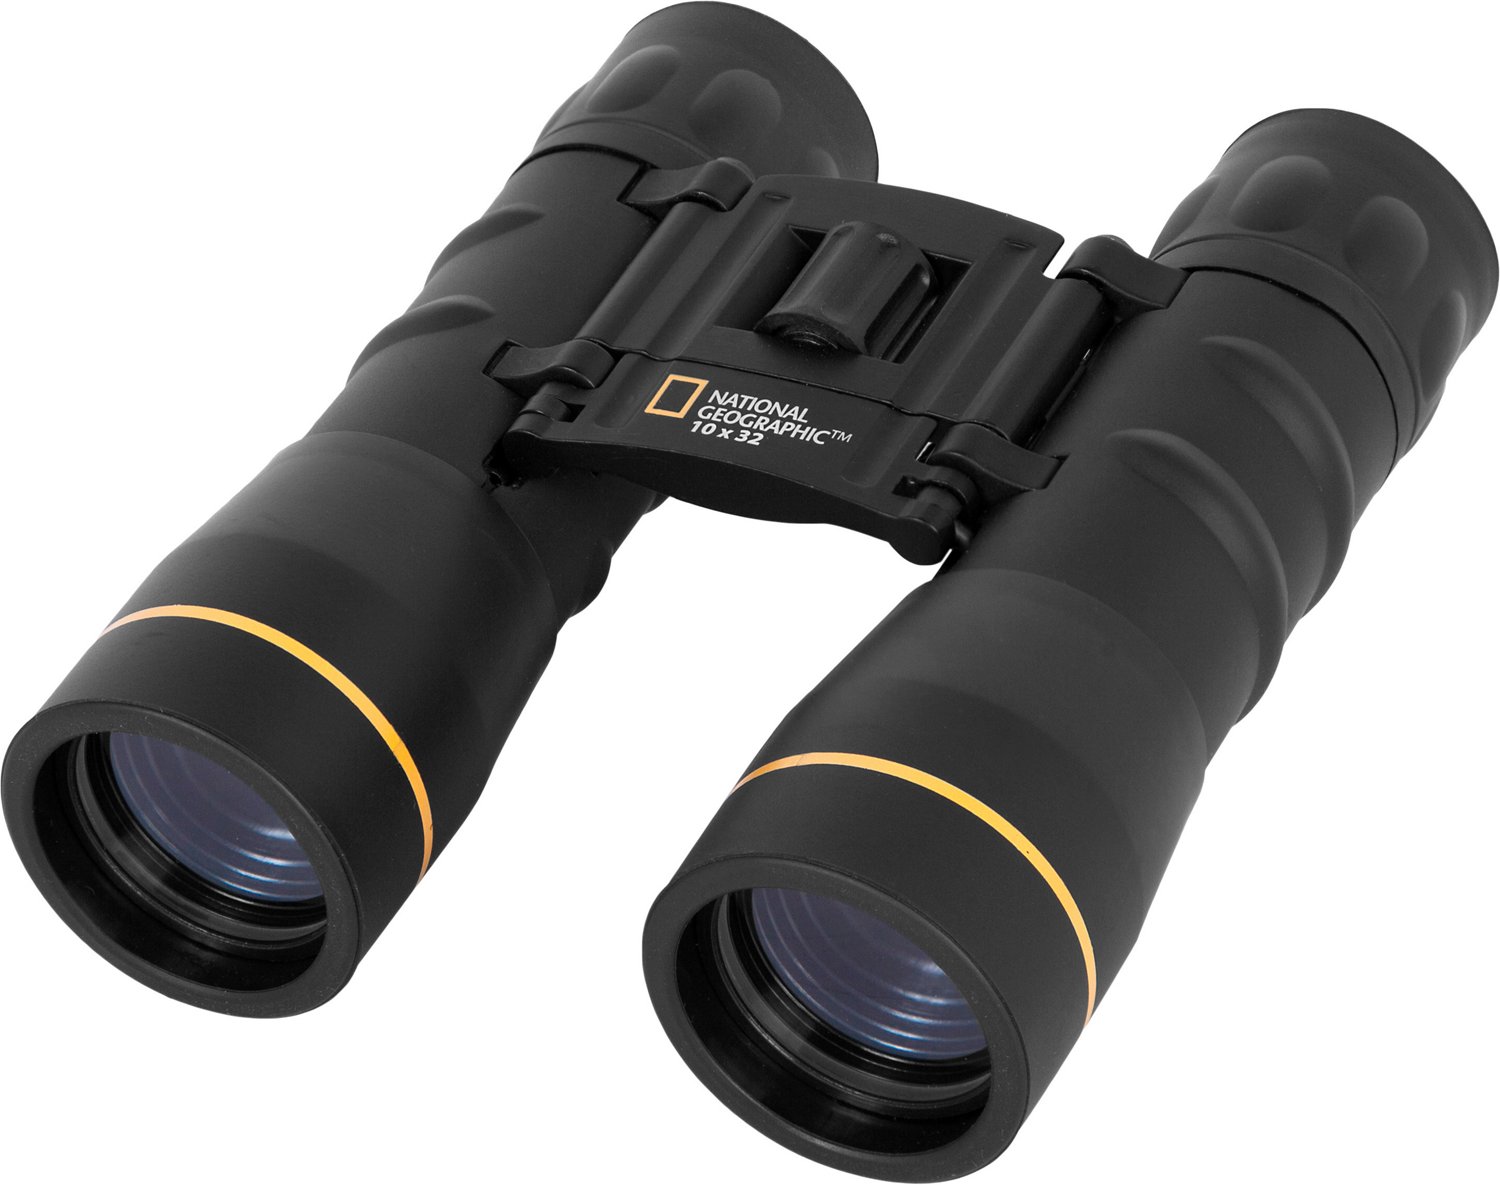 Hunting Binoculars, Porro Prism Binoculars | Academy